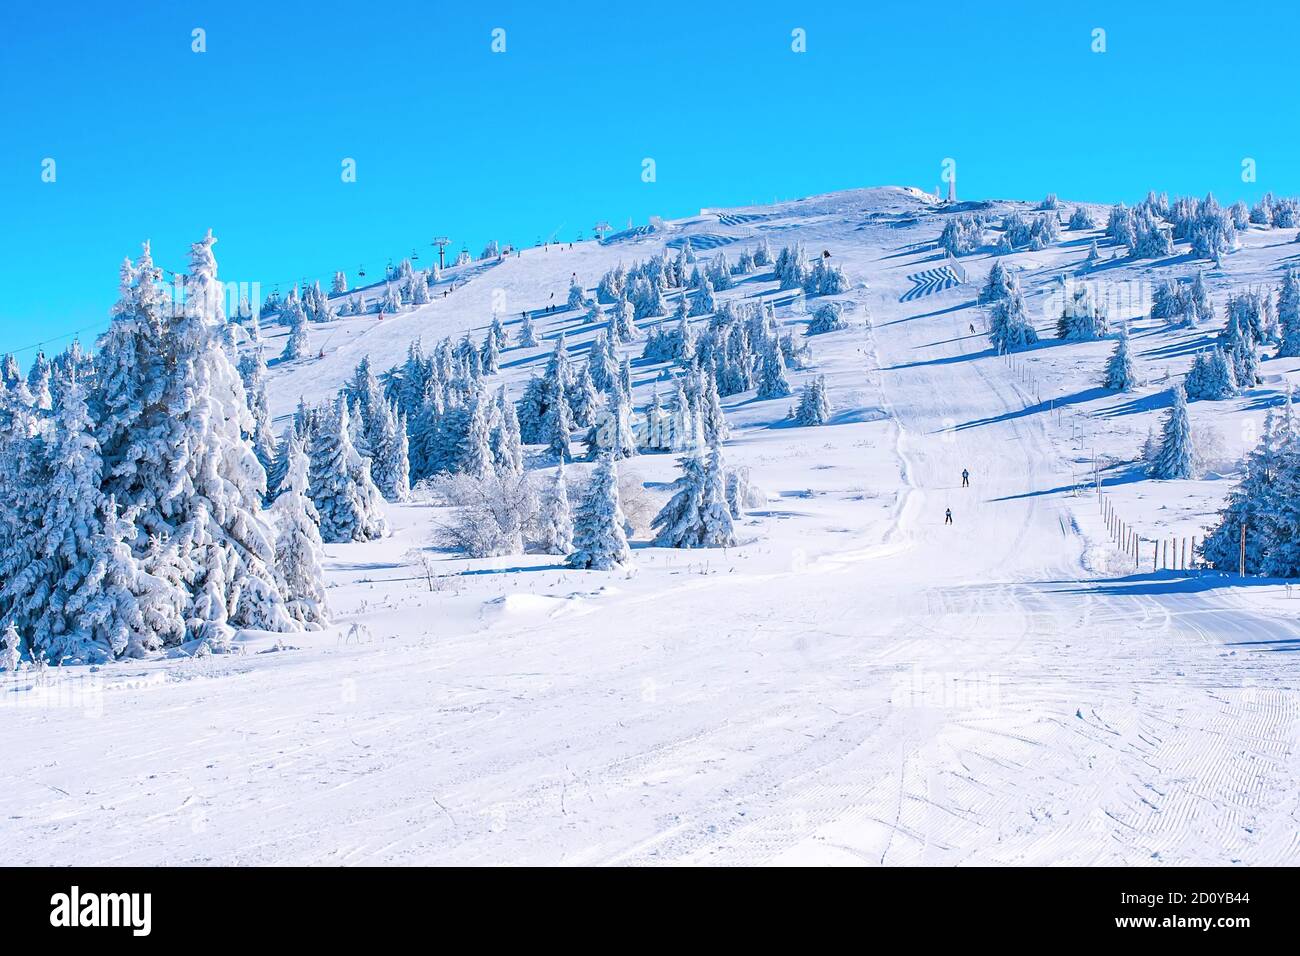 Winter Kopaonik, Serbia panorama of the slope at ski resort, people skiing, snow pine trees, blue sky Stock Photo